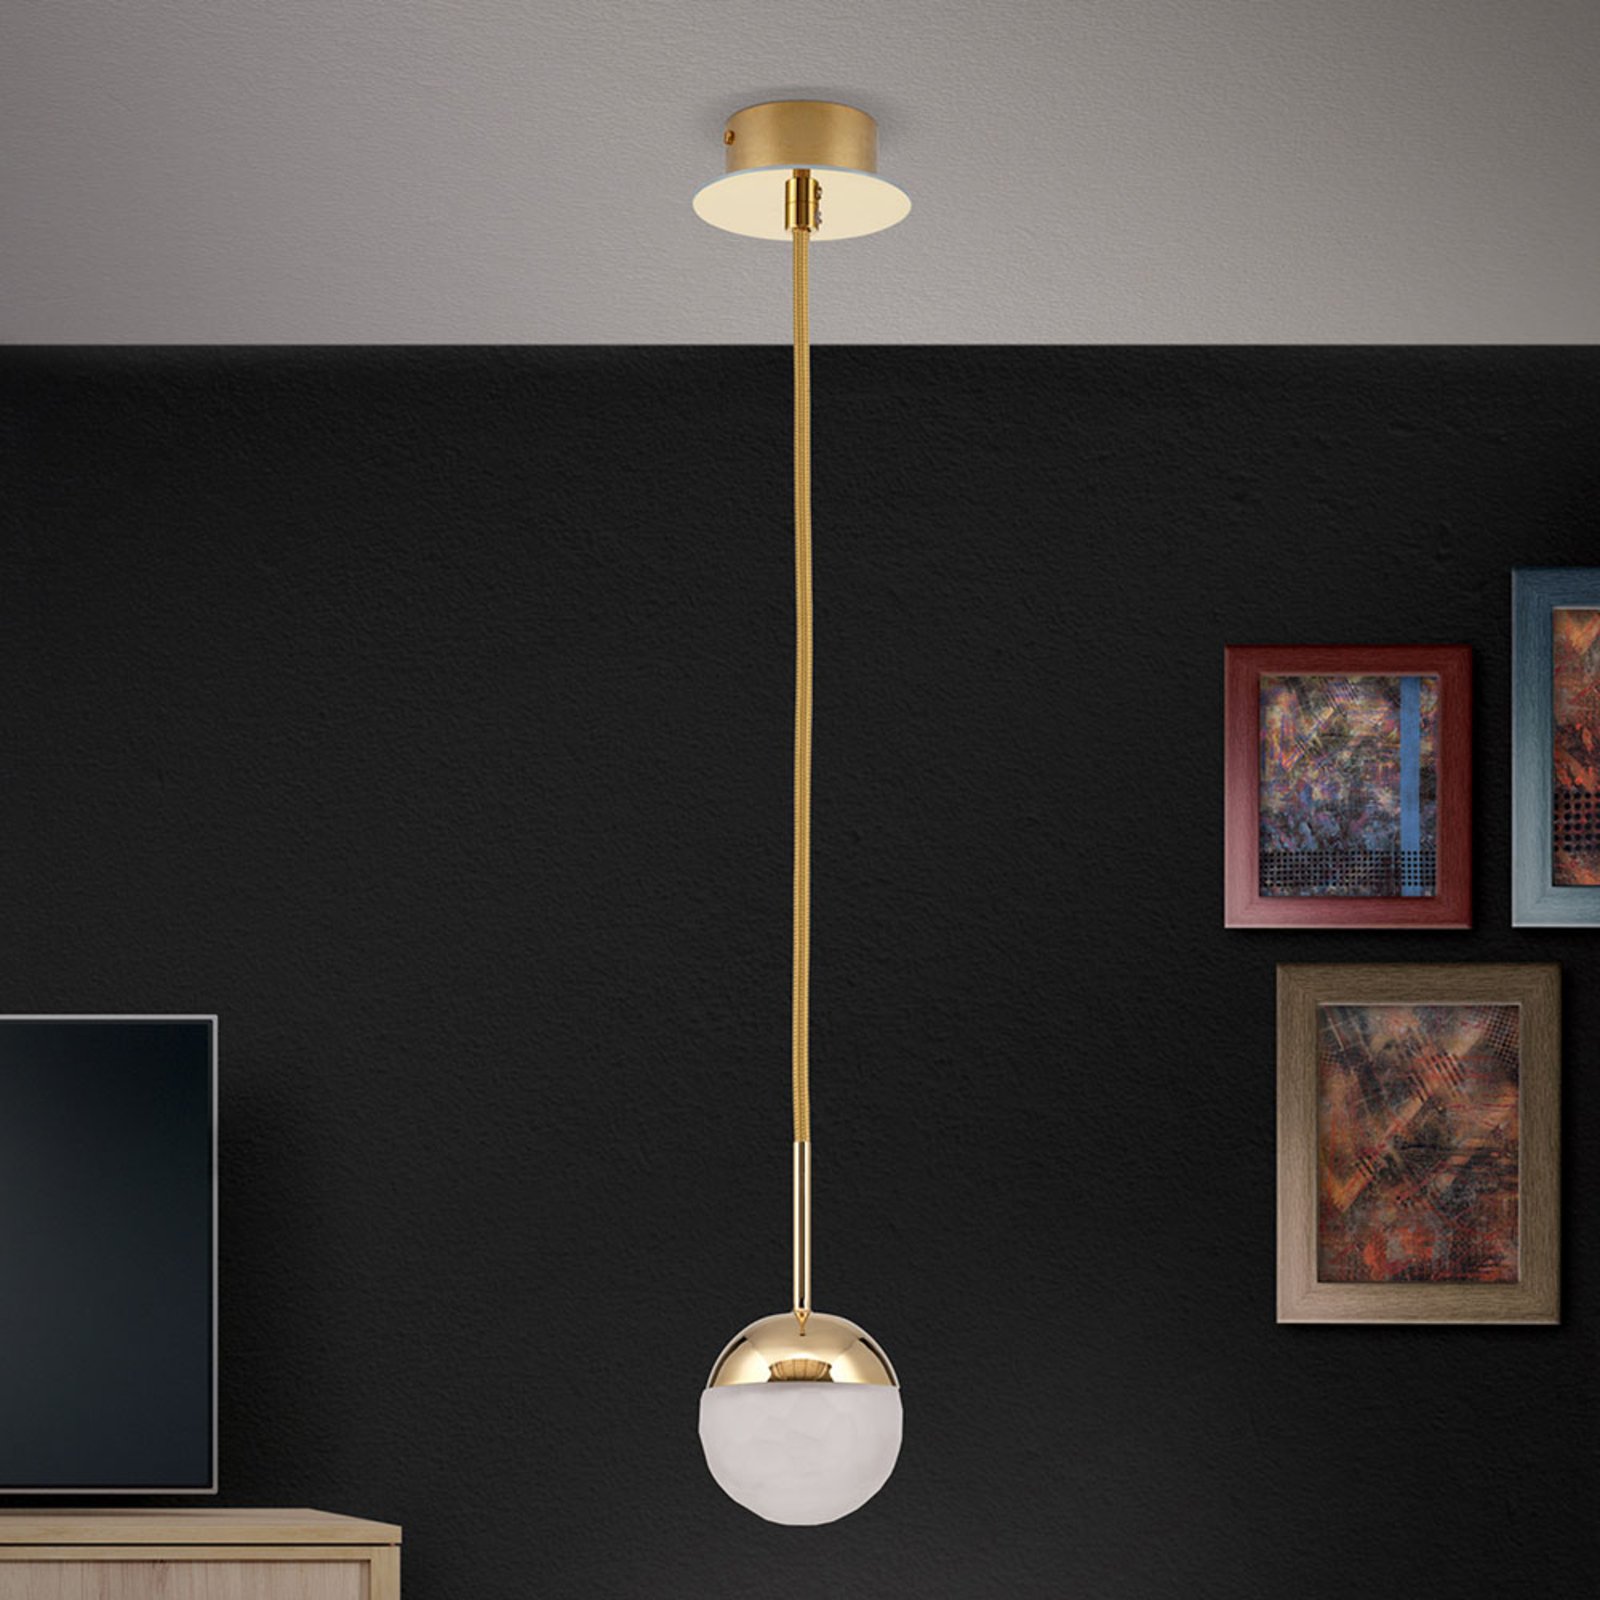 Ball LED hanging light, one-bulb, gold